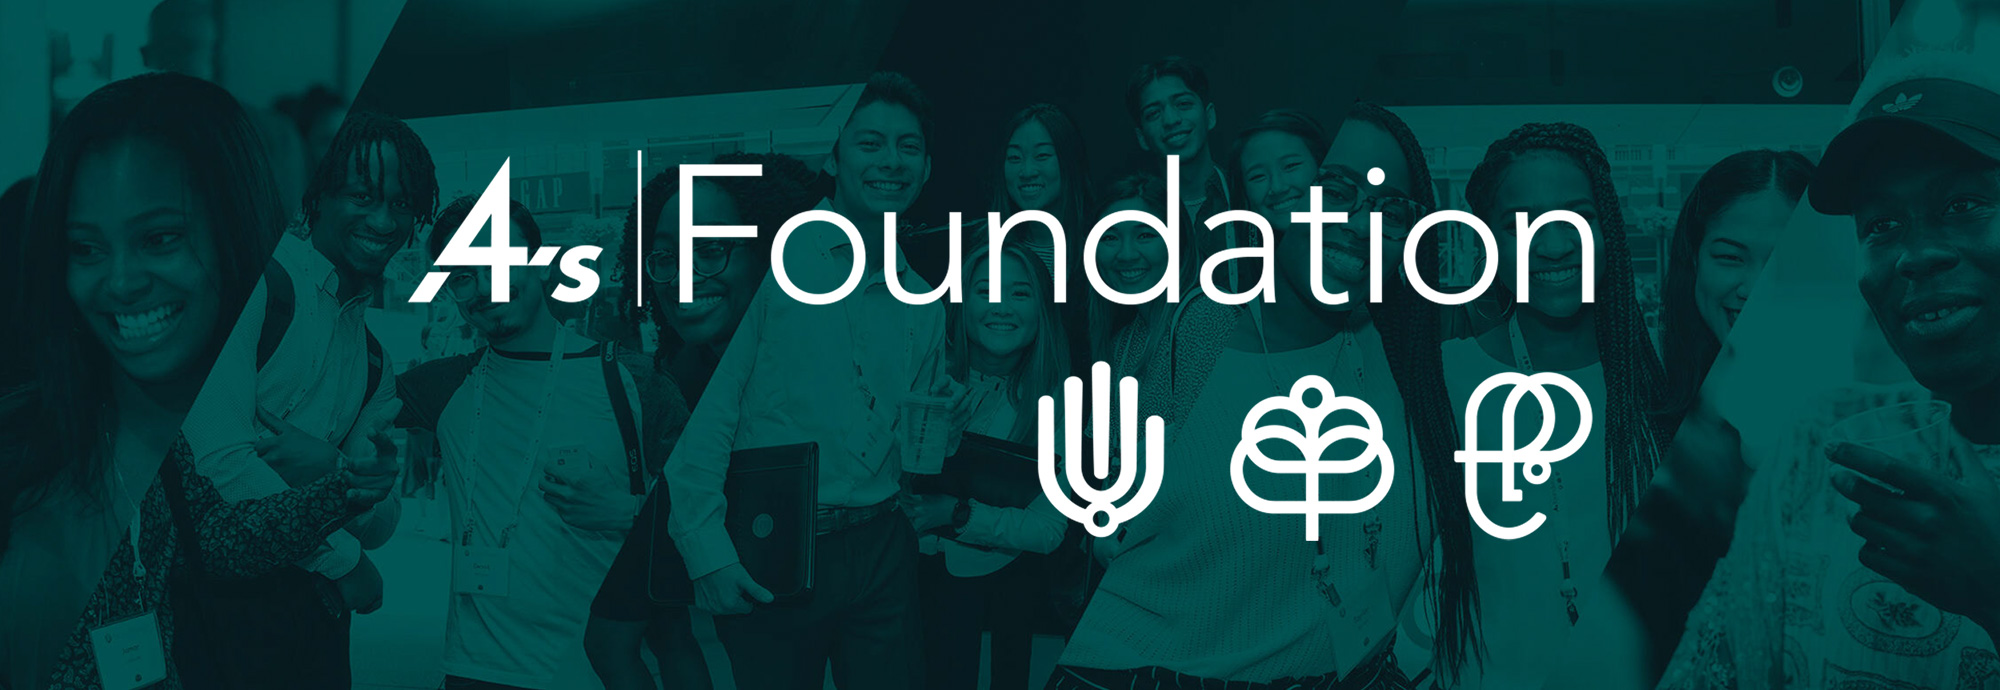 The 4A's Foundation Identitiy